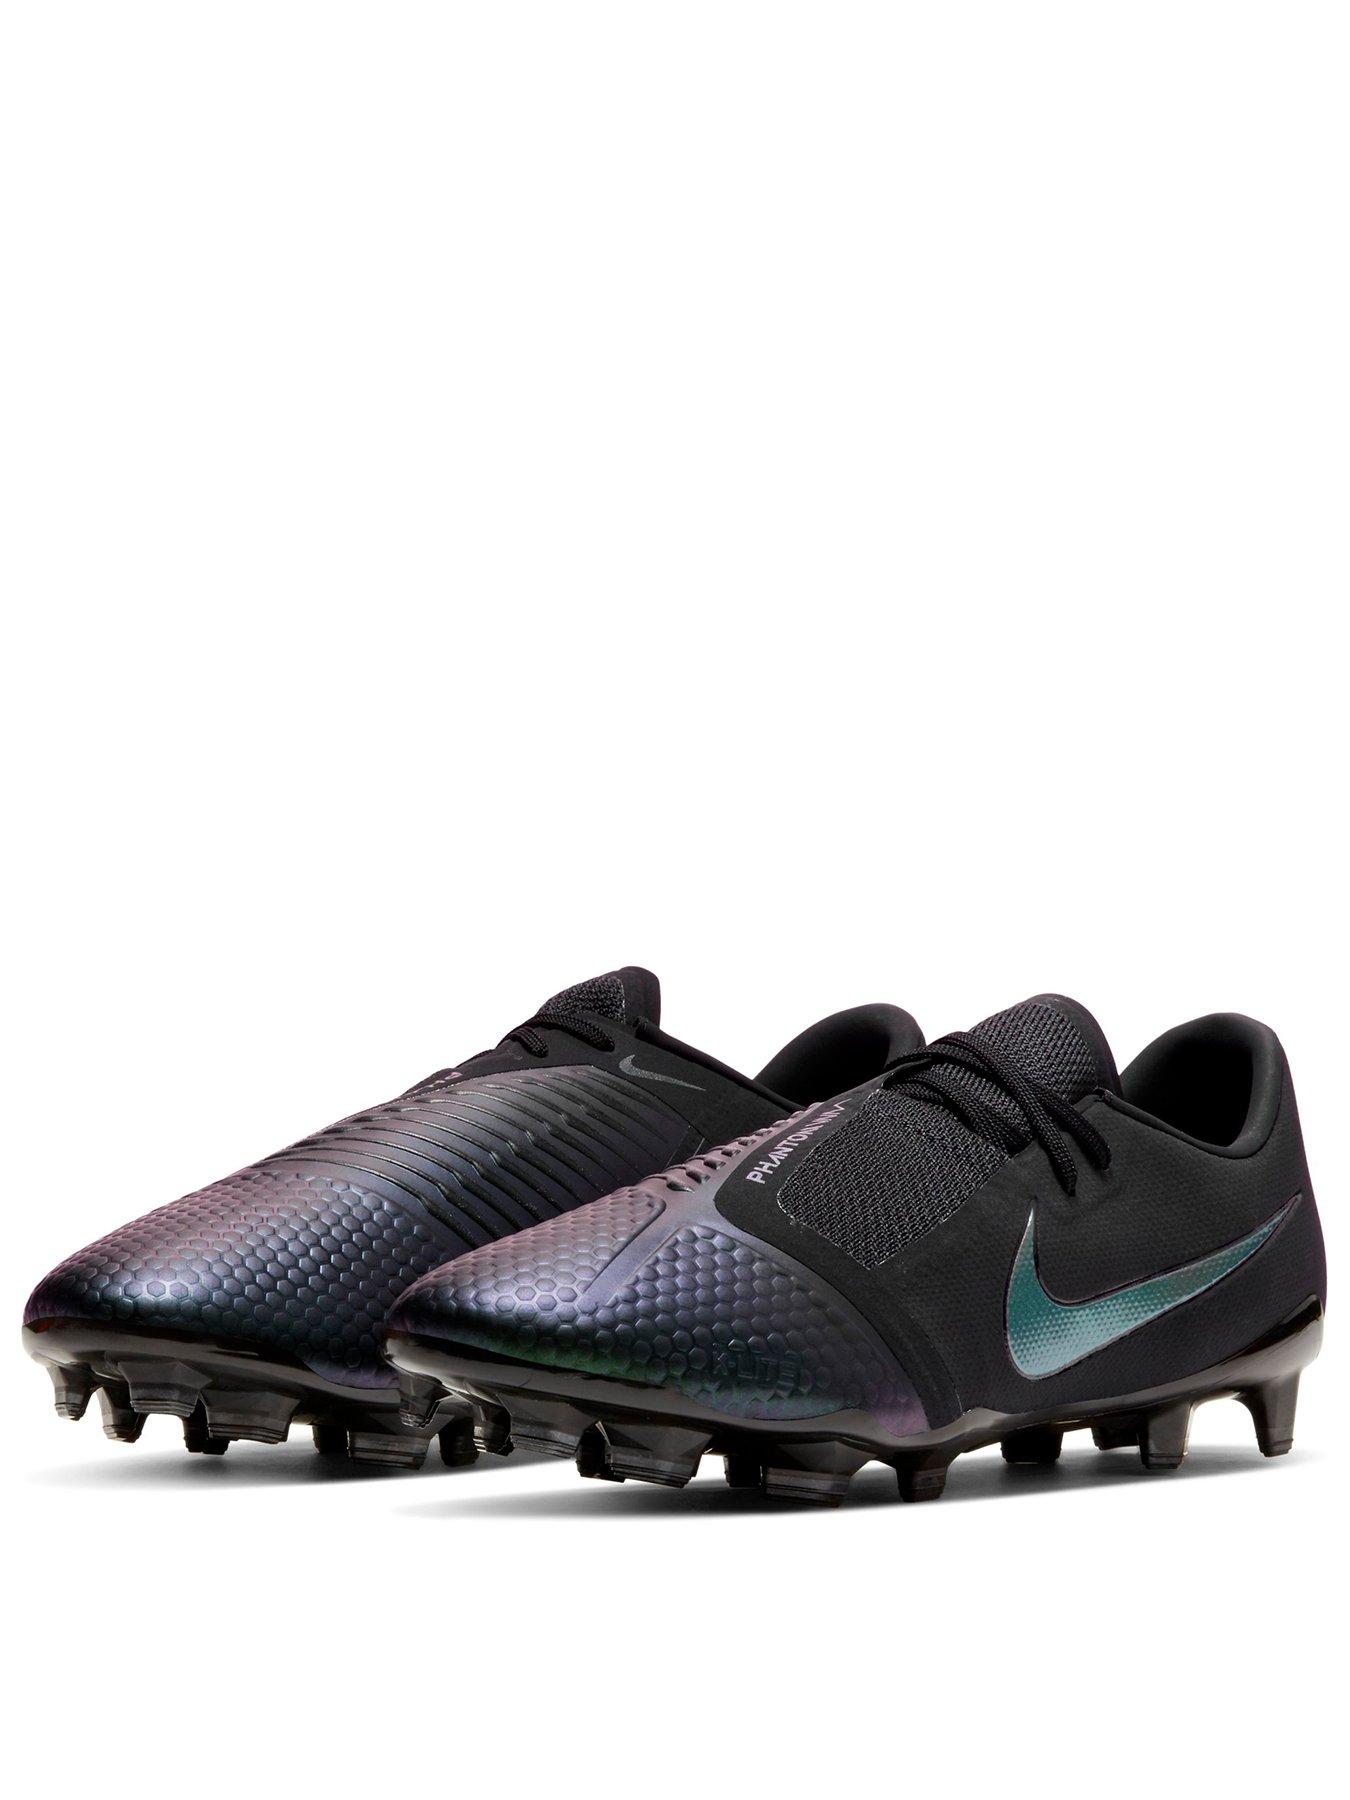 Nike Neymar Jr Hypervenom Soccer Cleats Men 's Shoes .